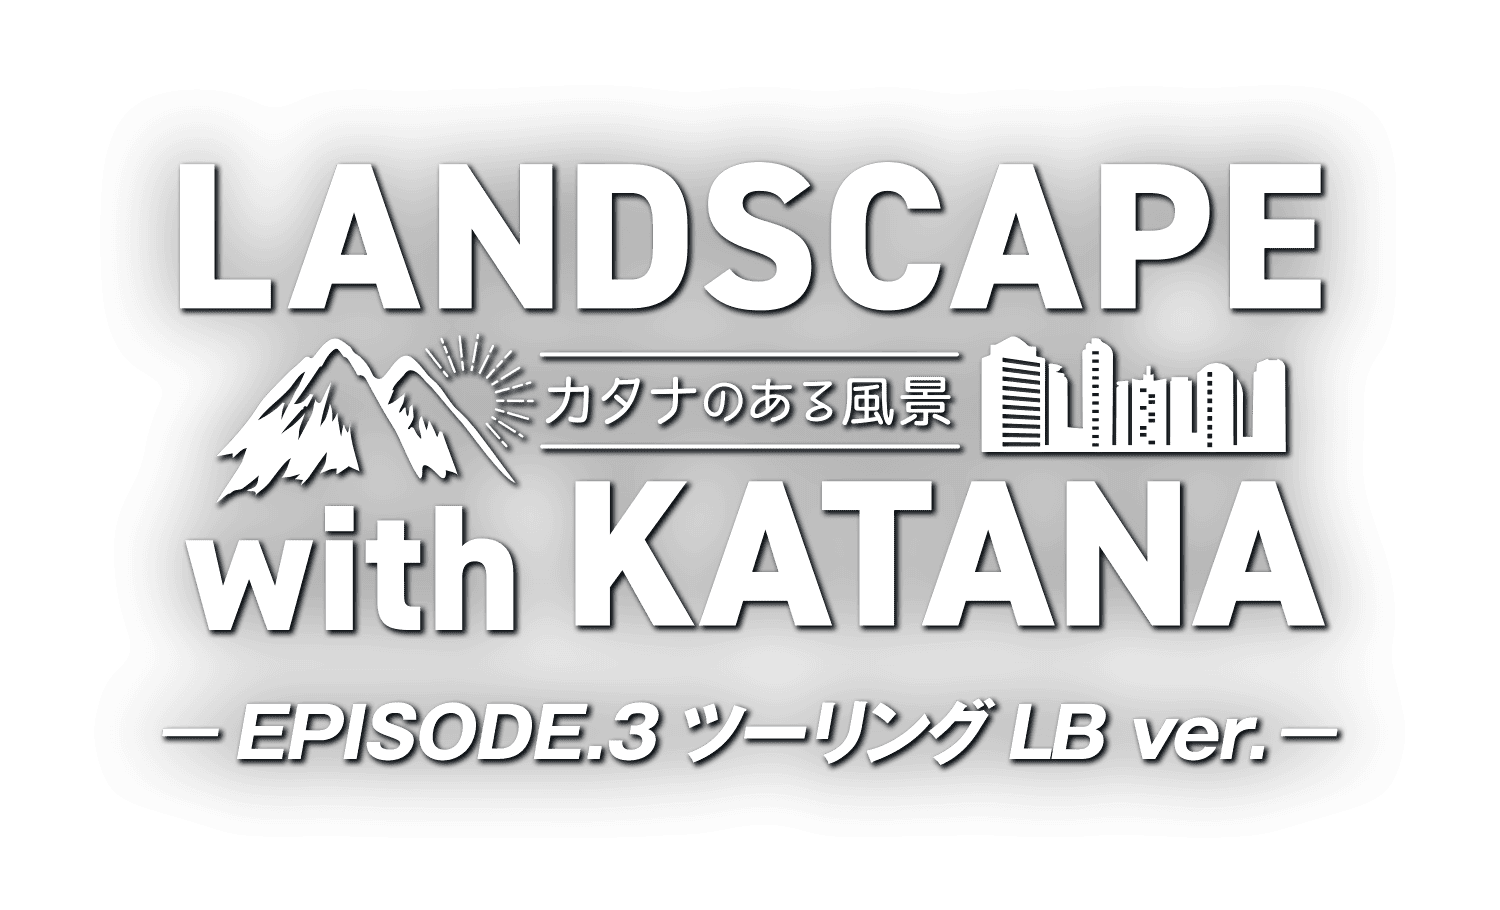 LANDSCAPE with KATANA 〜カタナのある風景〜 EPISODE.3 ツーリング LB ver.